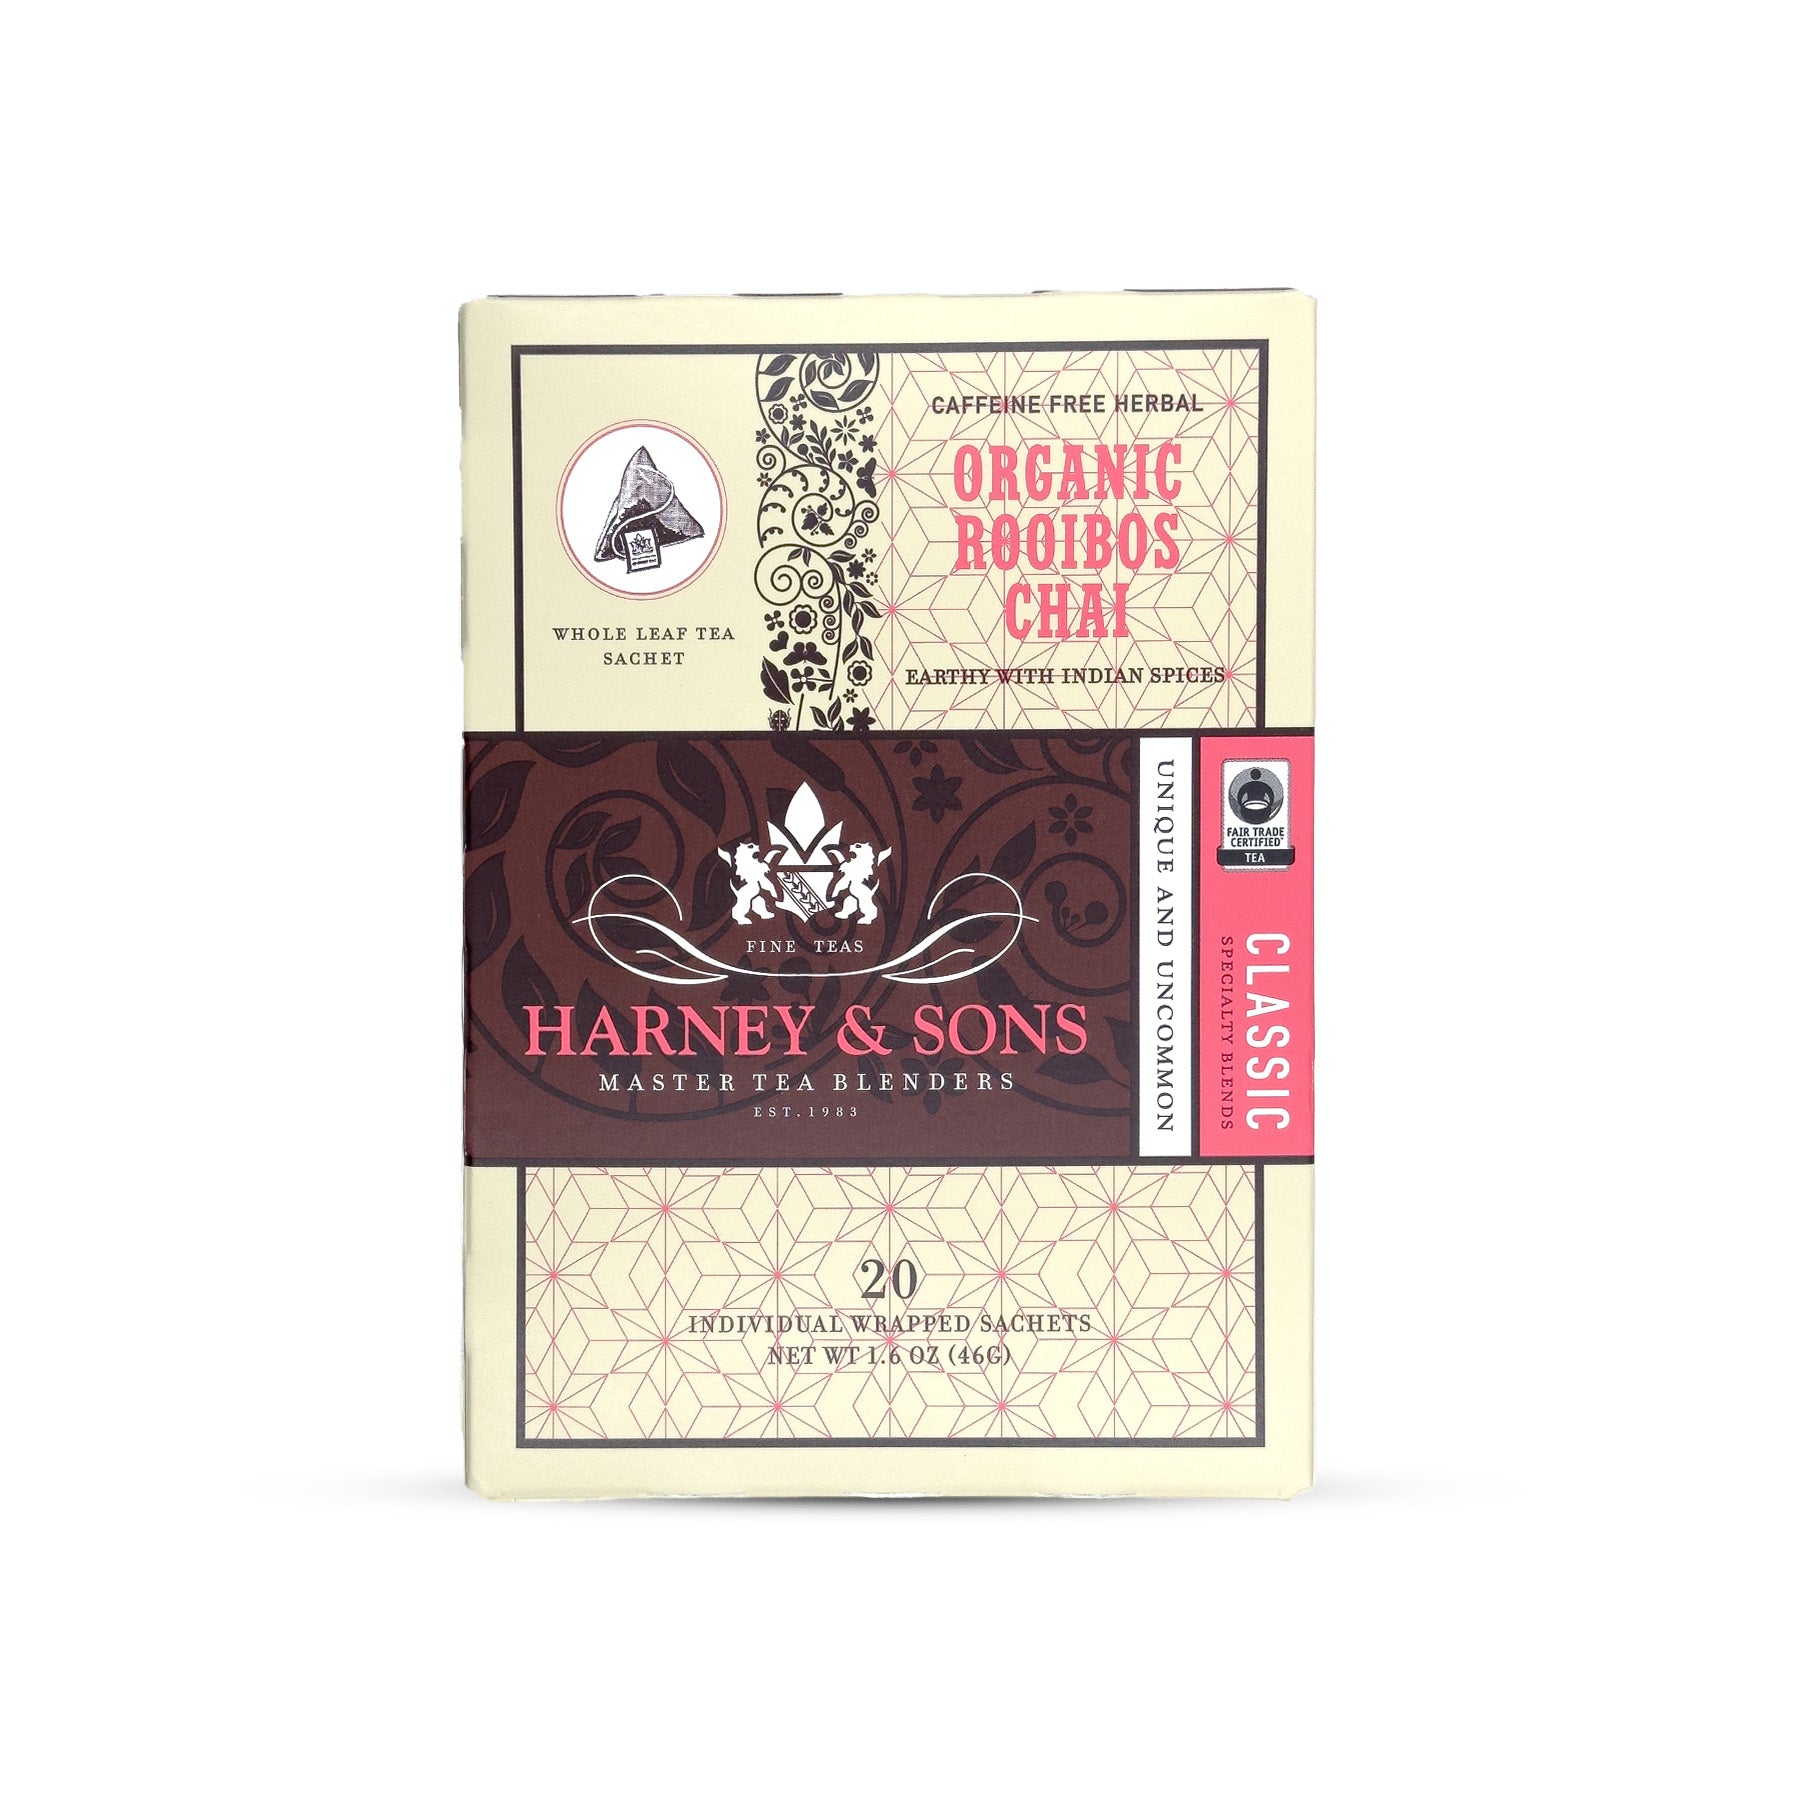 Organic Rooibos Chai - Box of 20 Individually Wrapped Sachets - Harney & Sons Fine Teas Europe